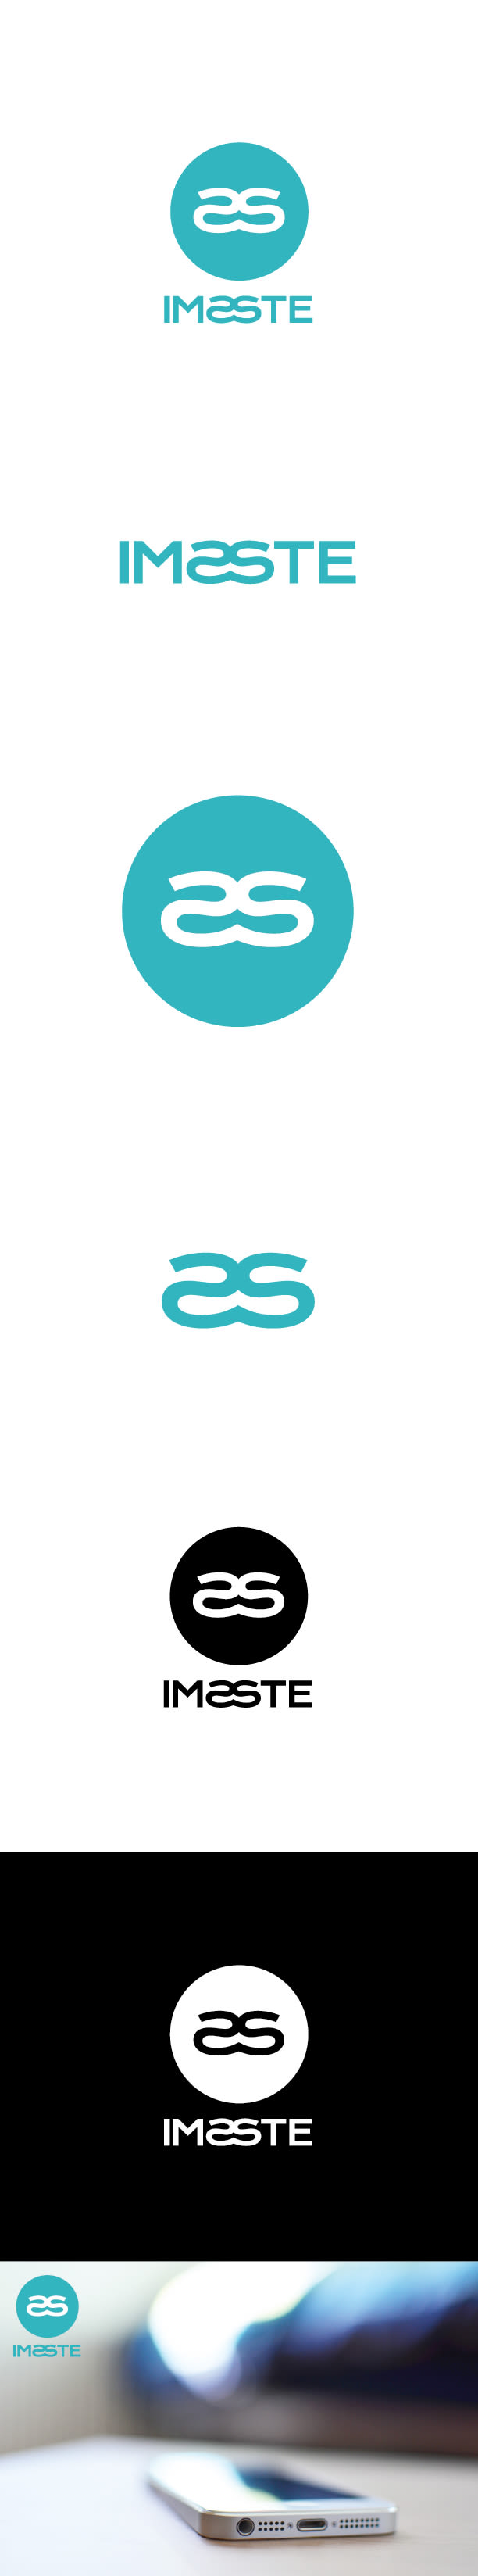 Logo proposal - Imaste -1